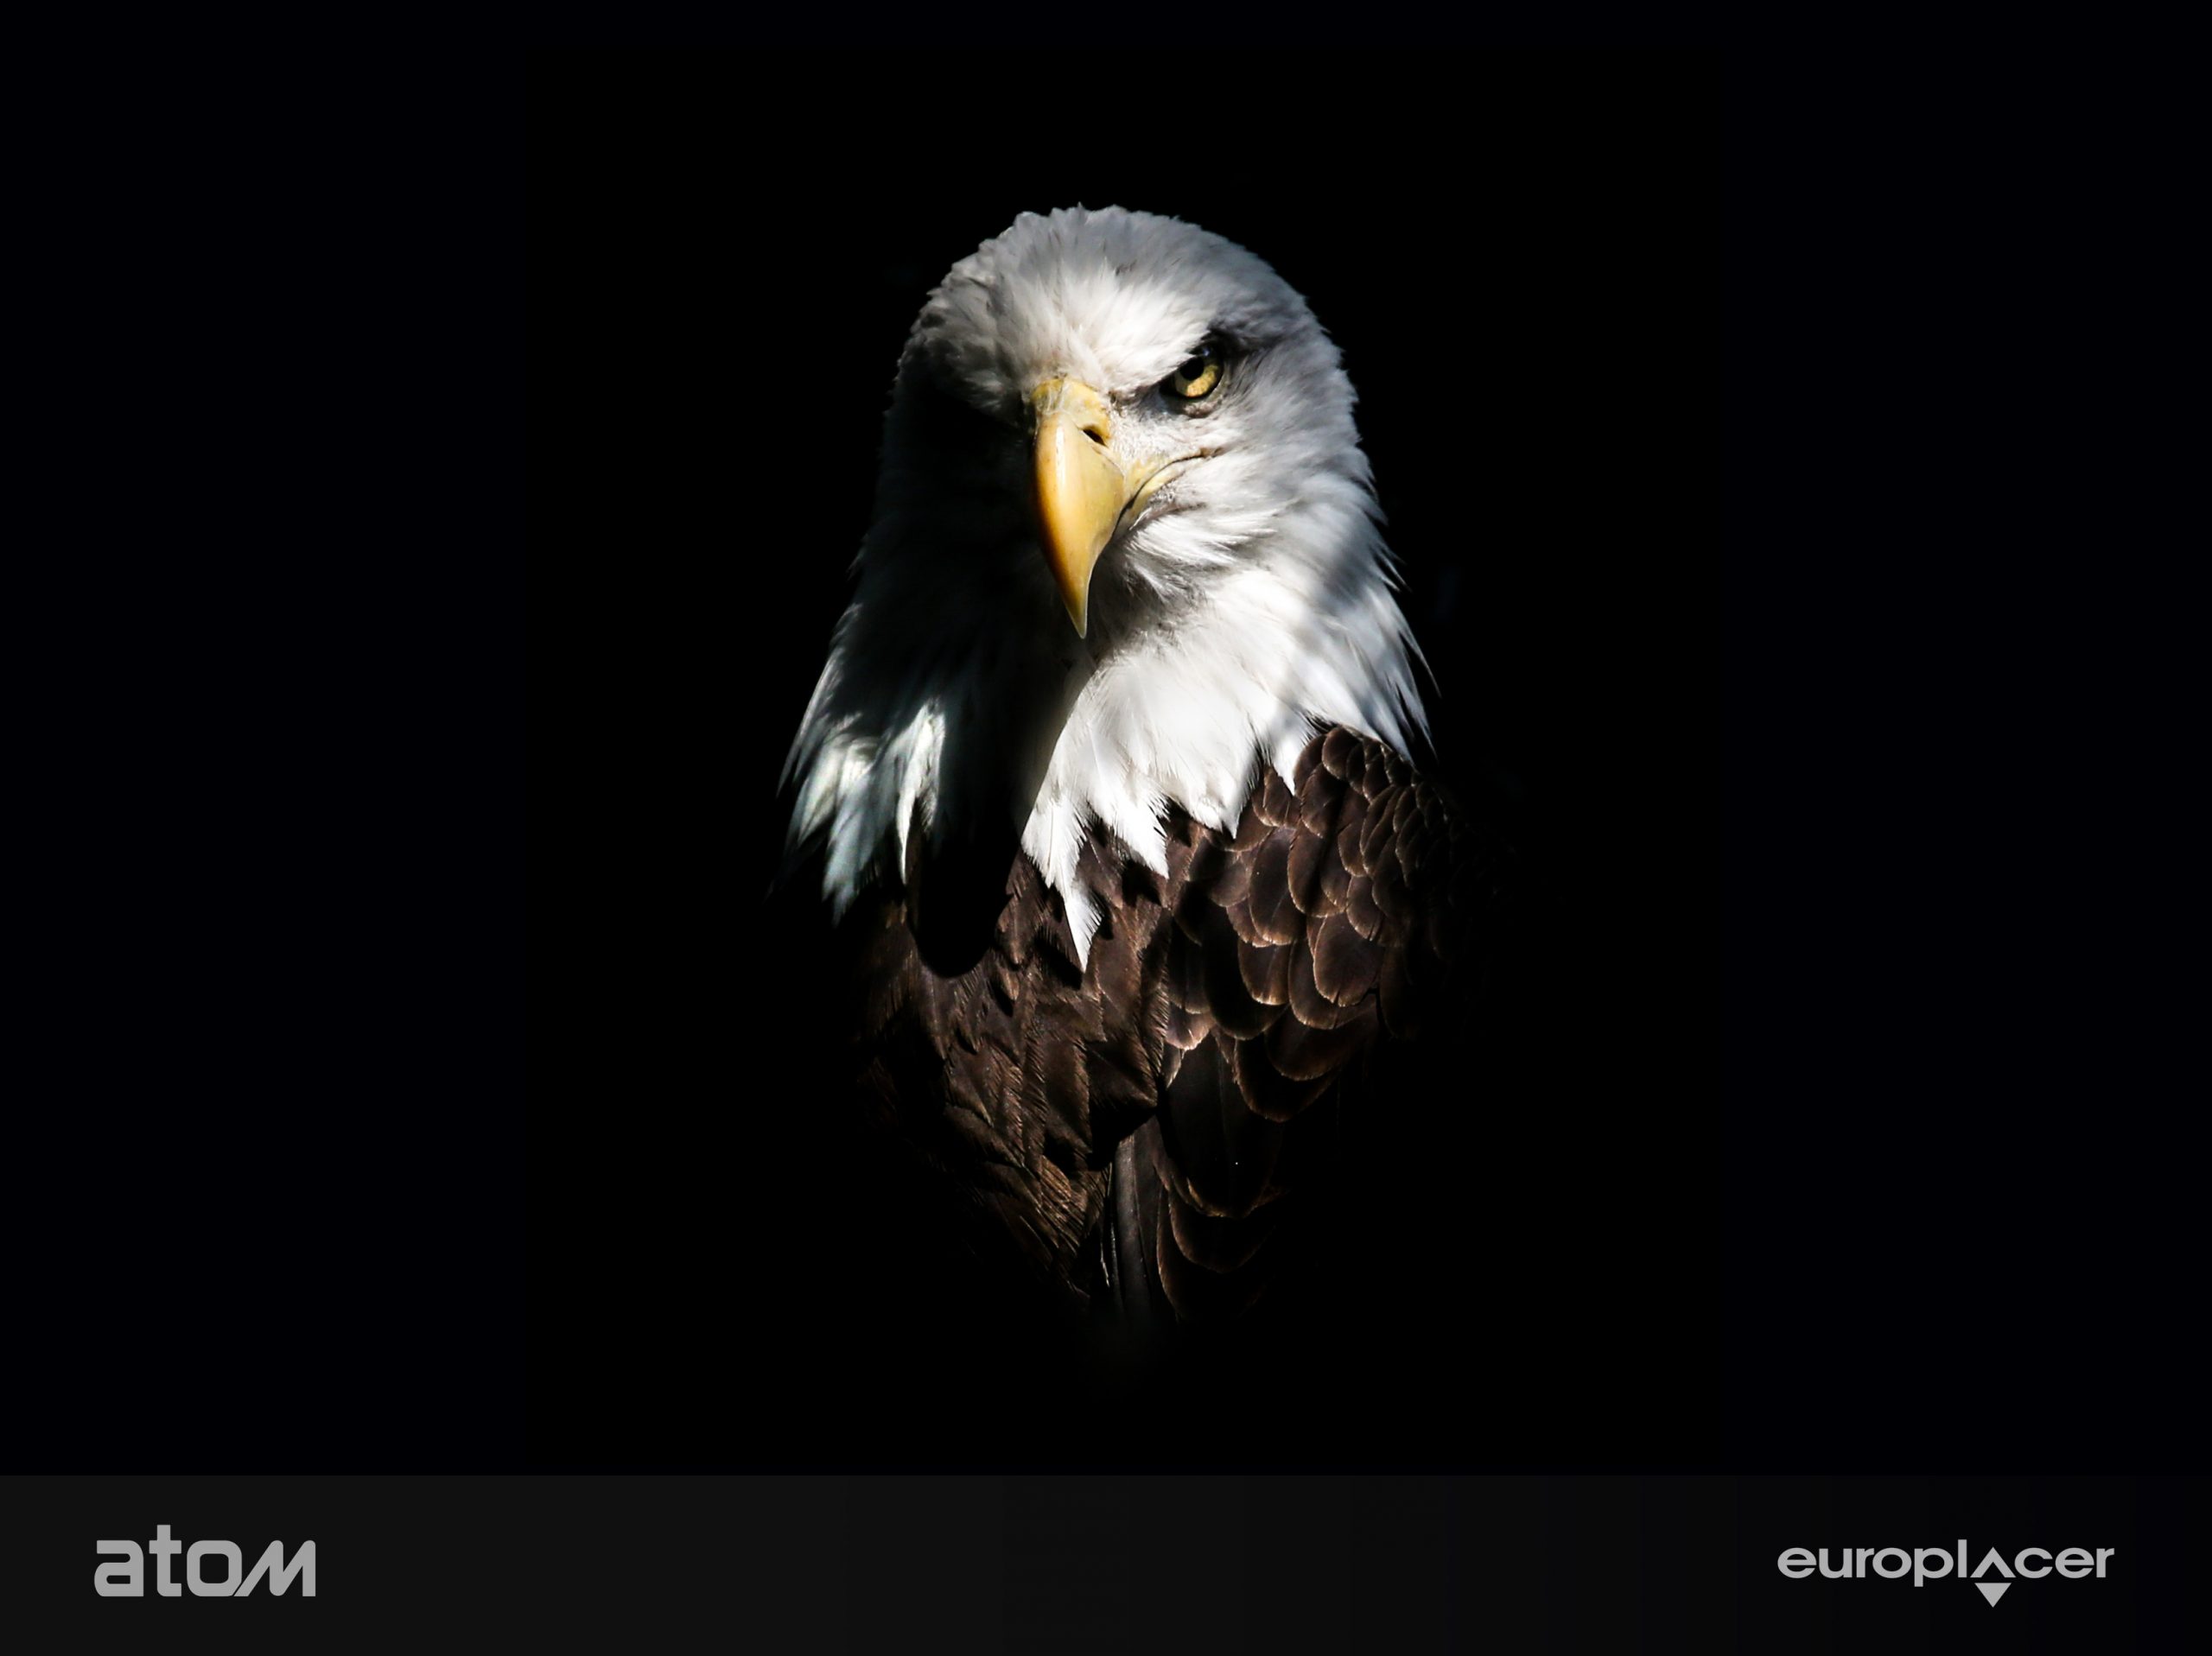 Europlacer eagle promotion image